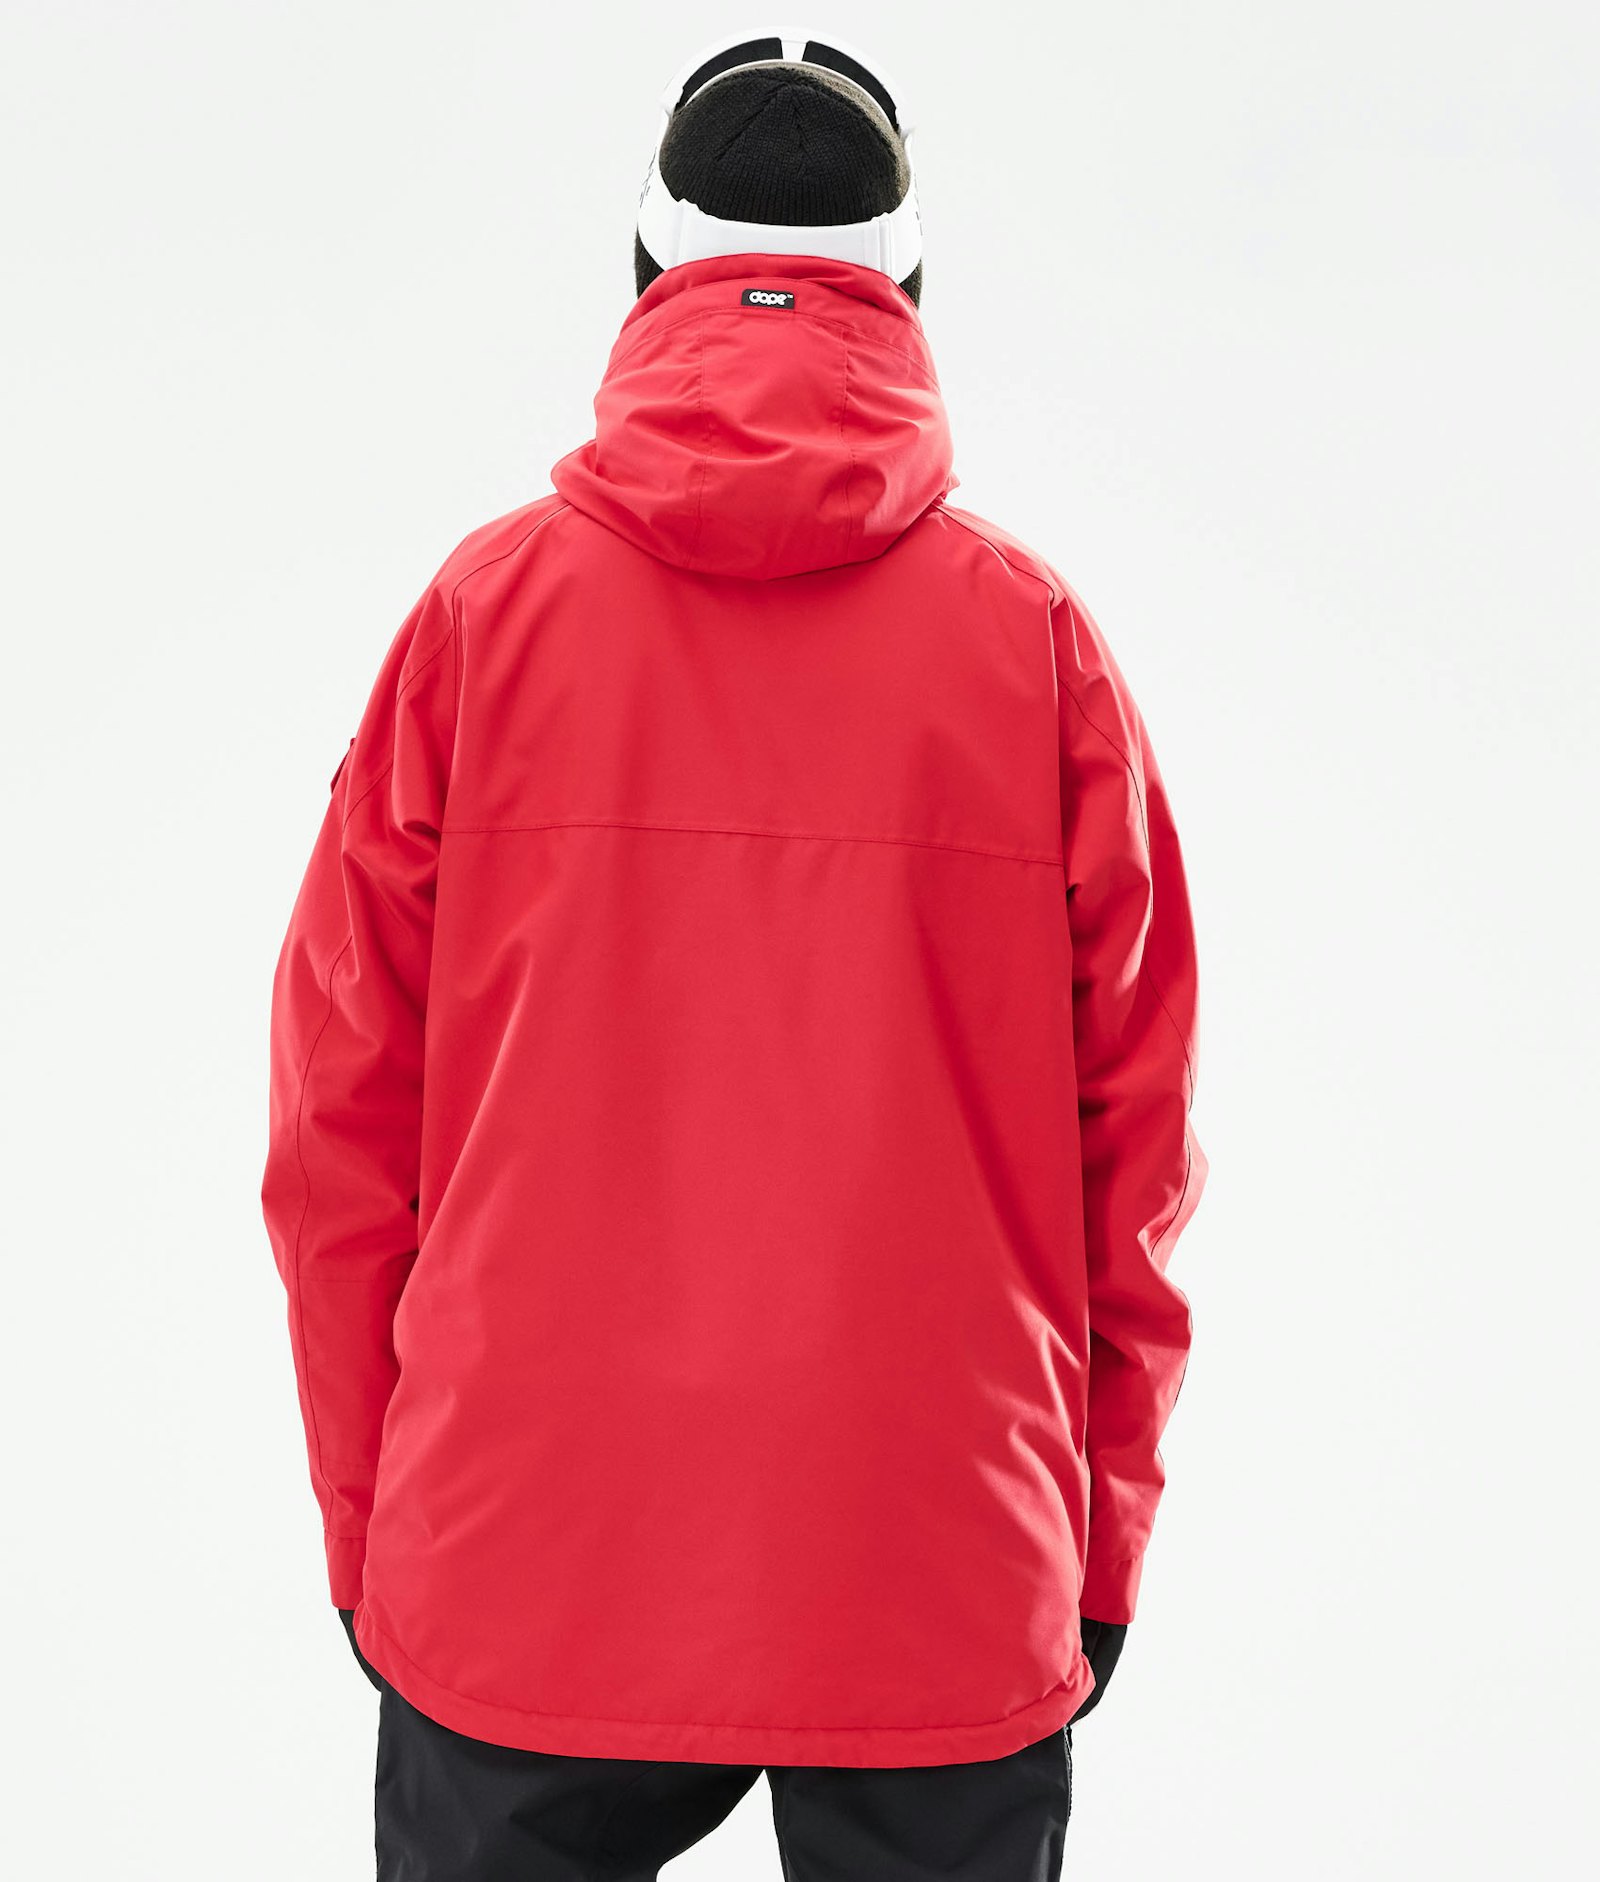 Akin 2020 Snowboard Jacket Men Red